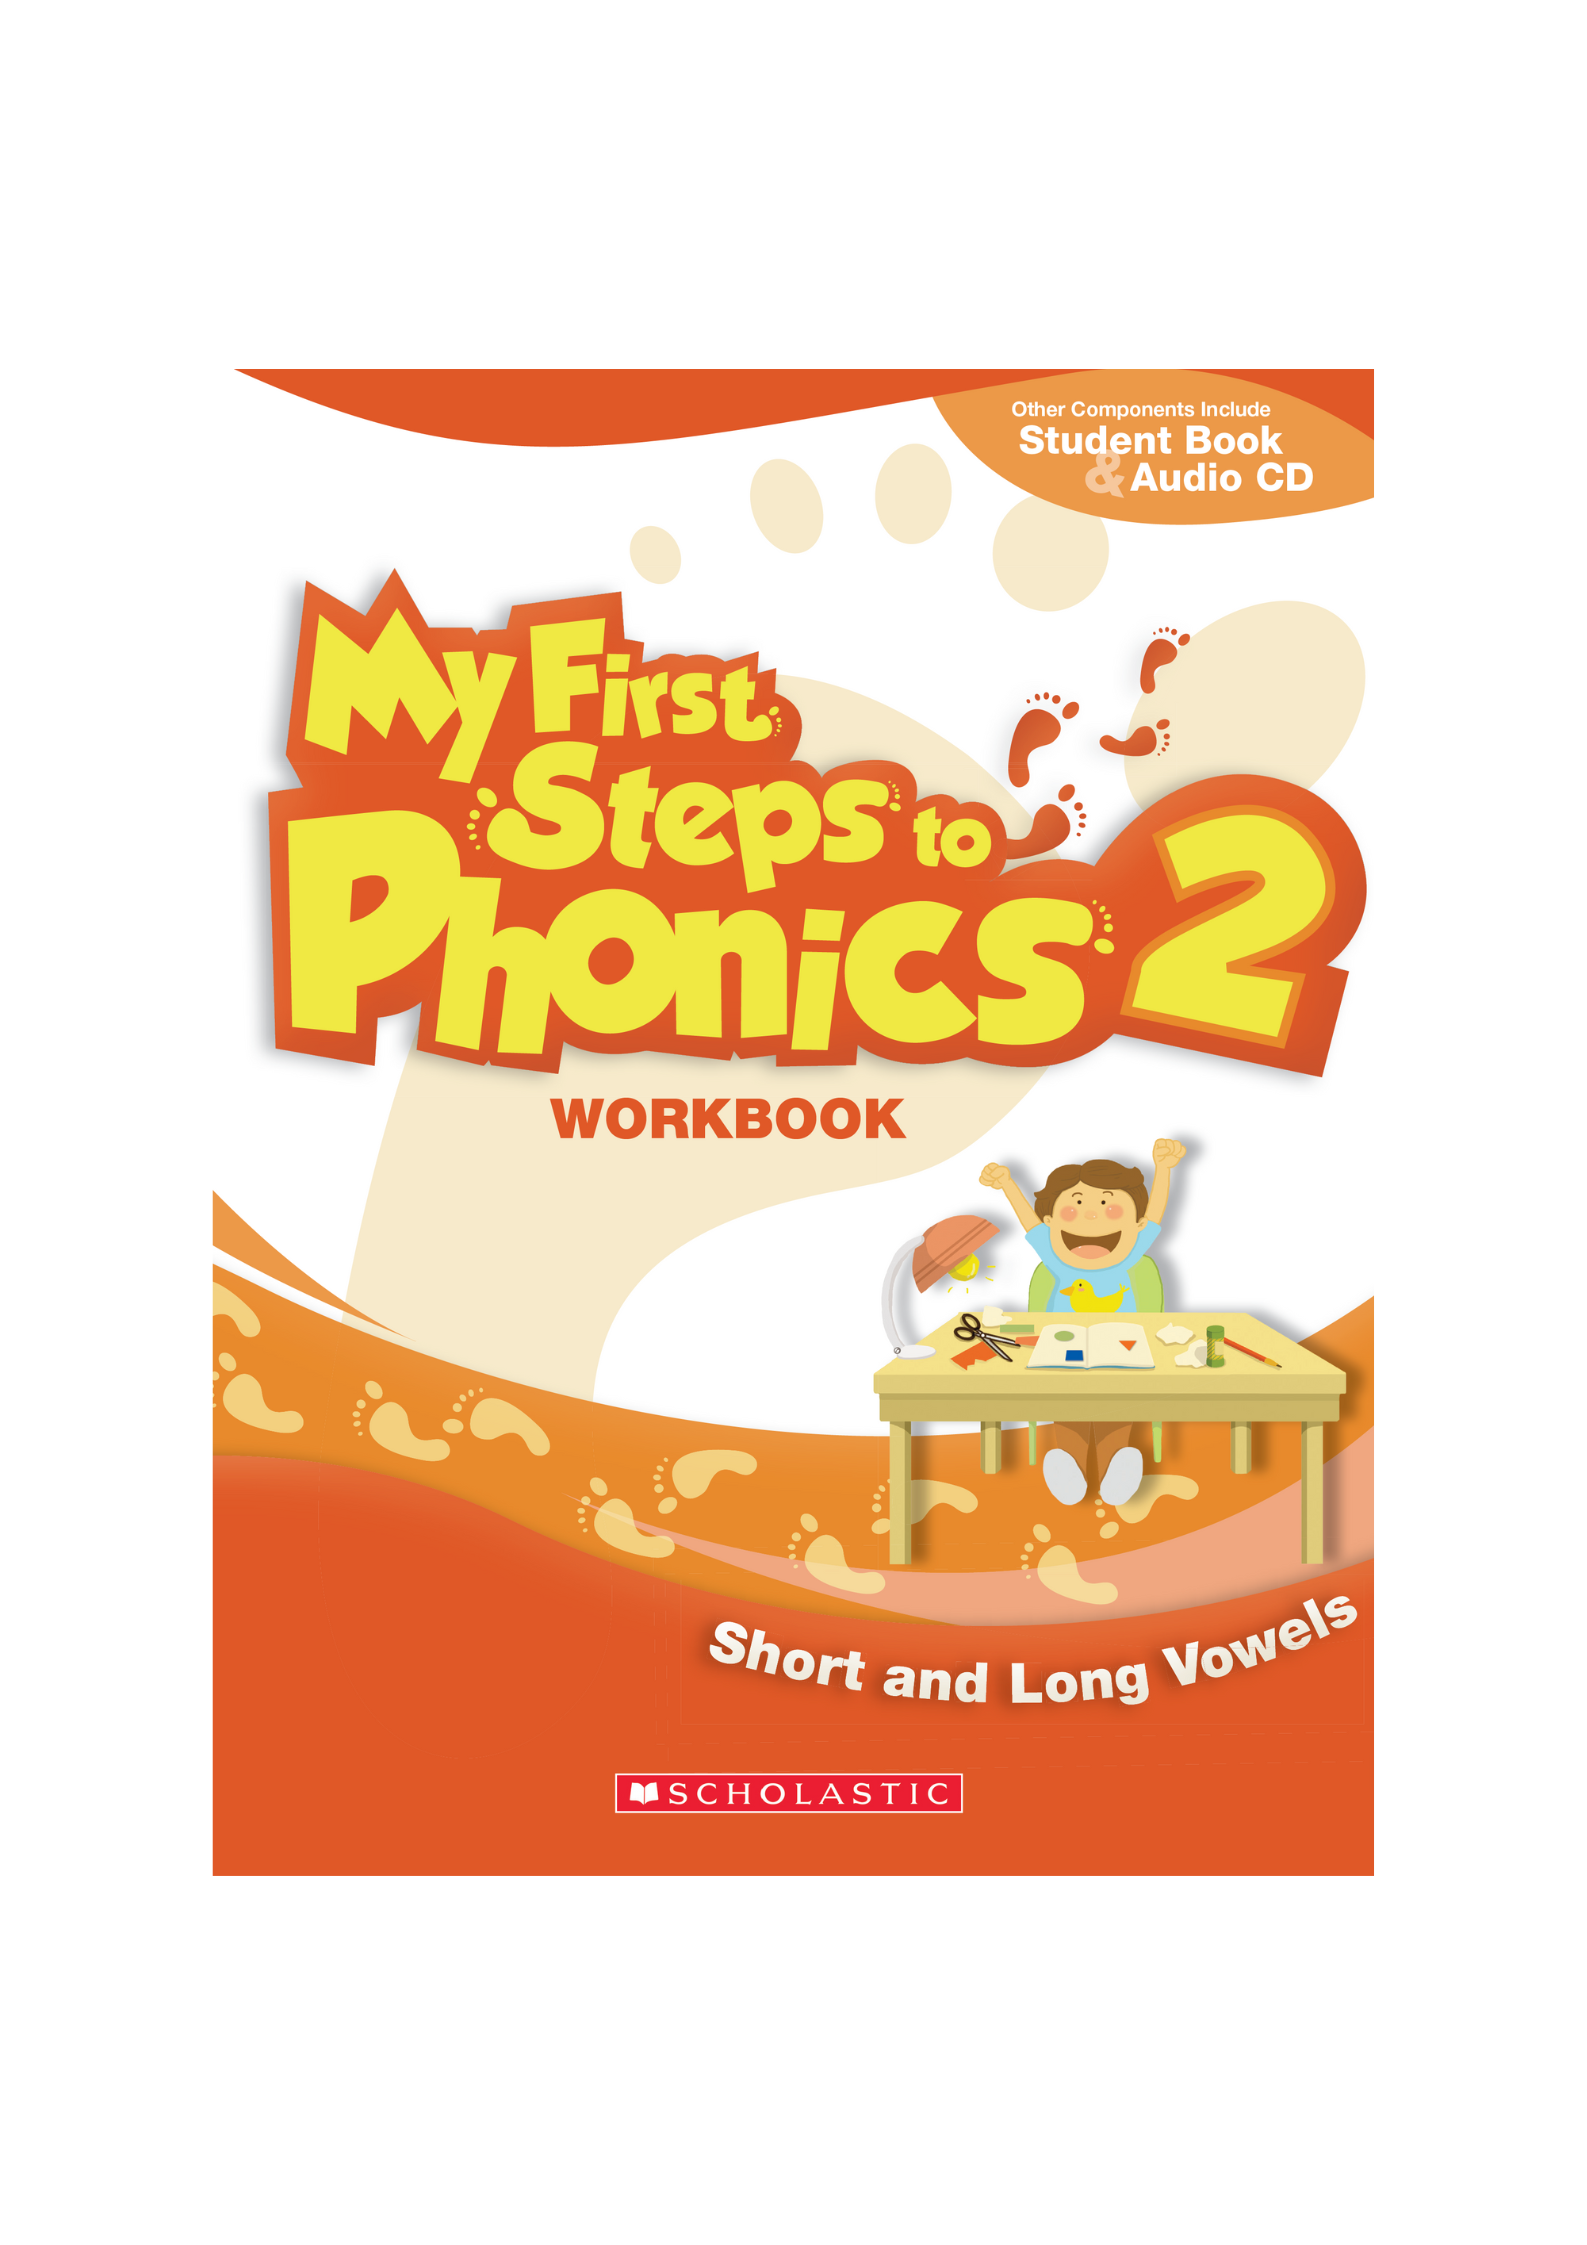 My First Step to Phonics 2: Workbook